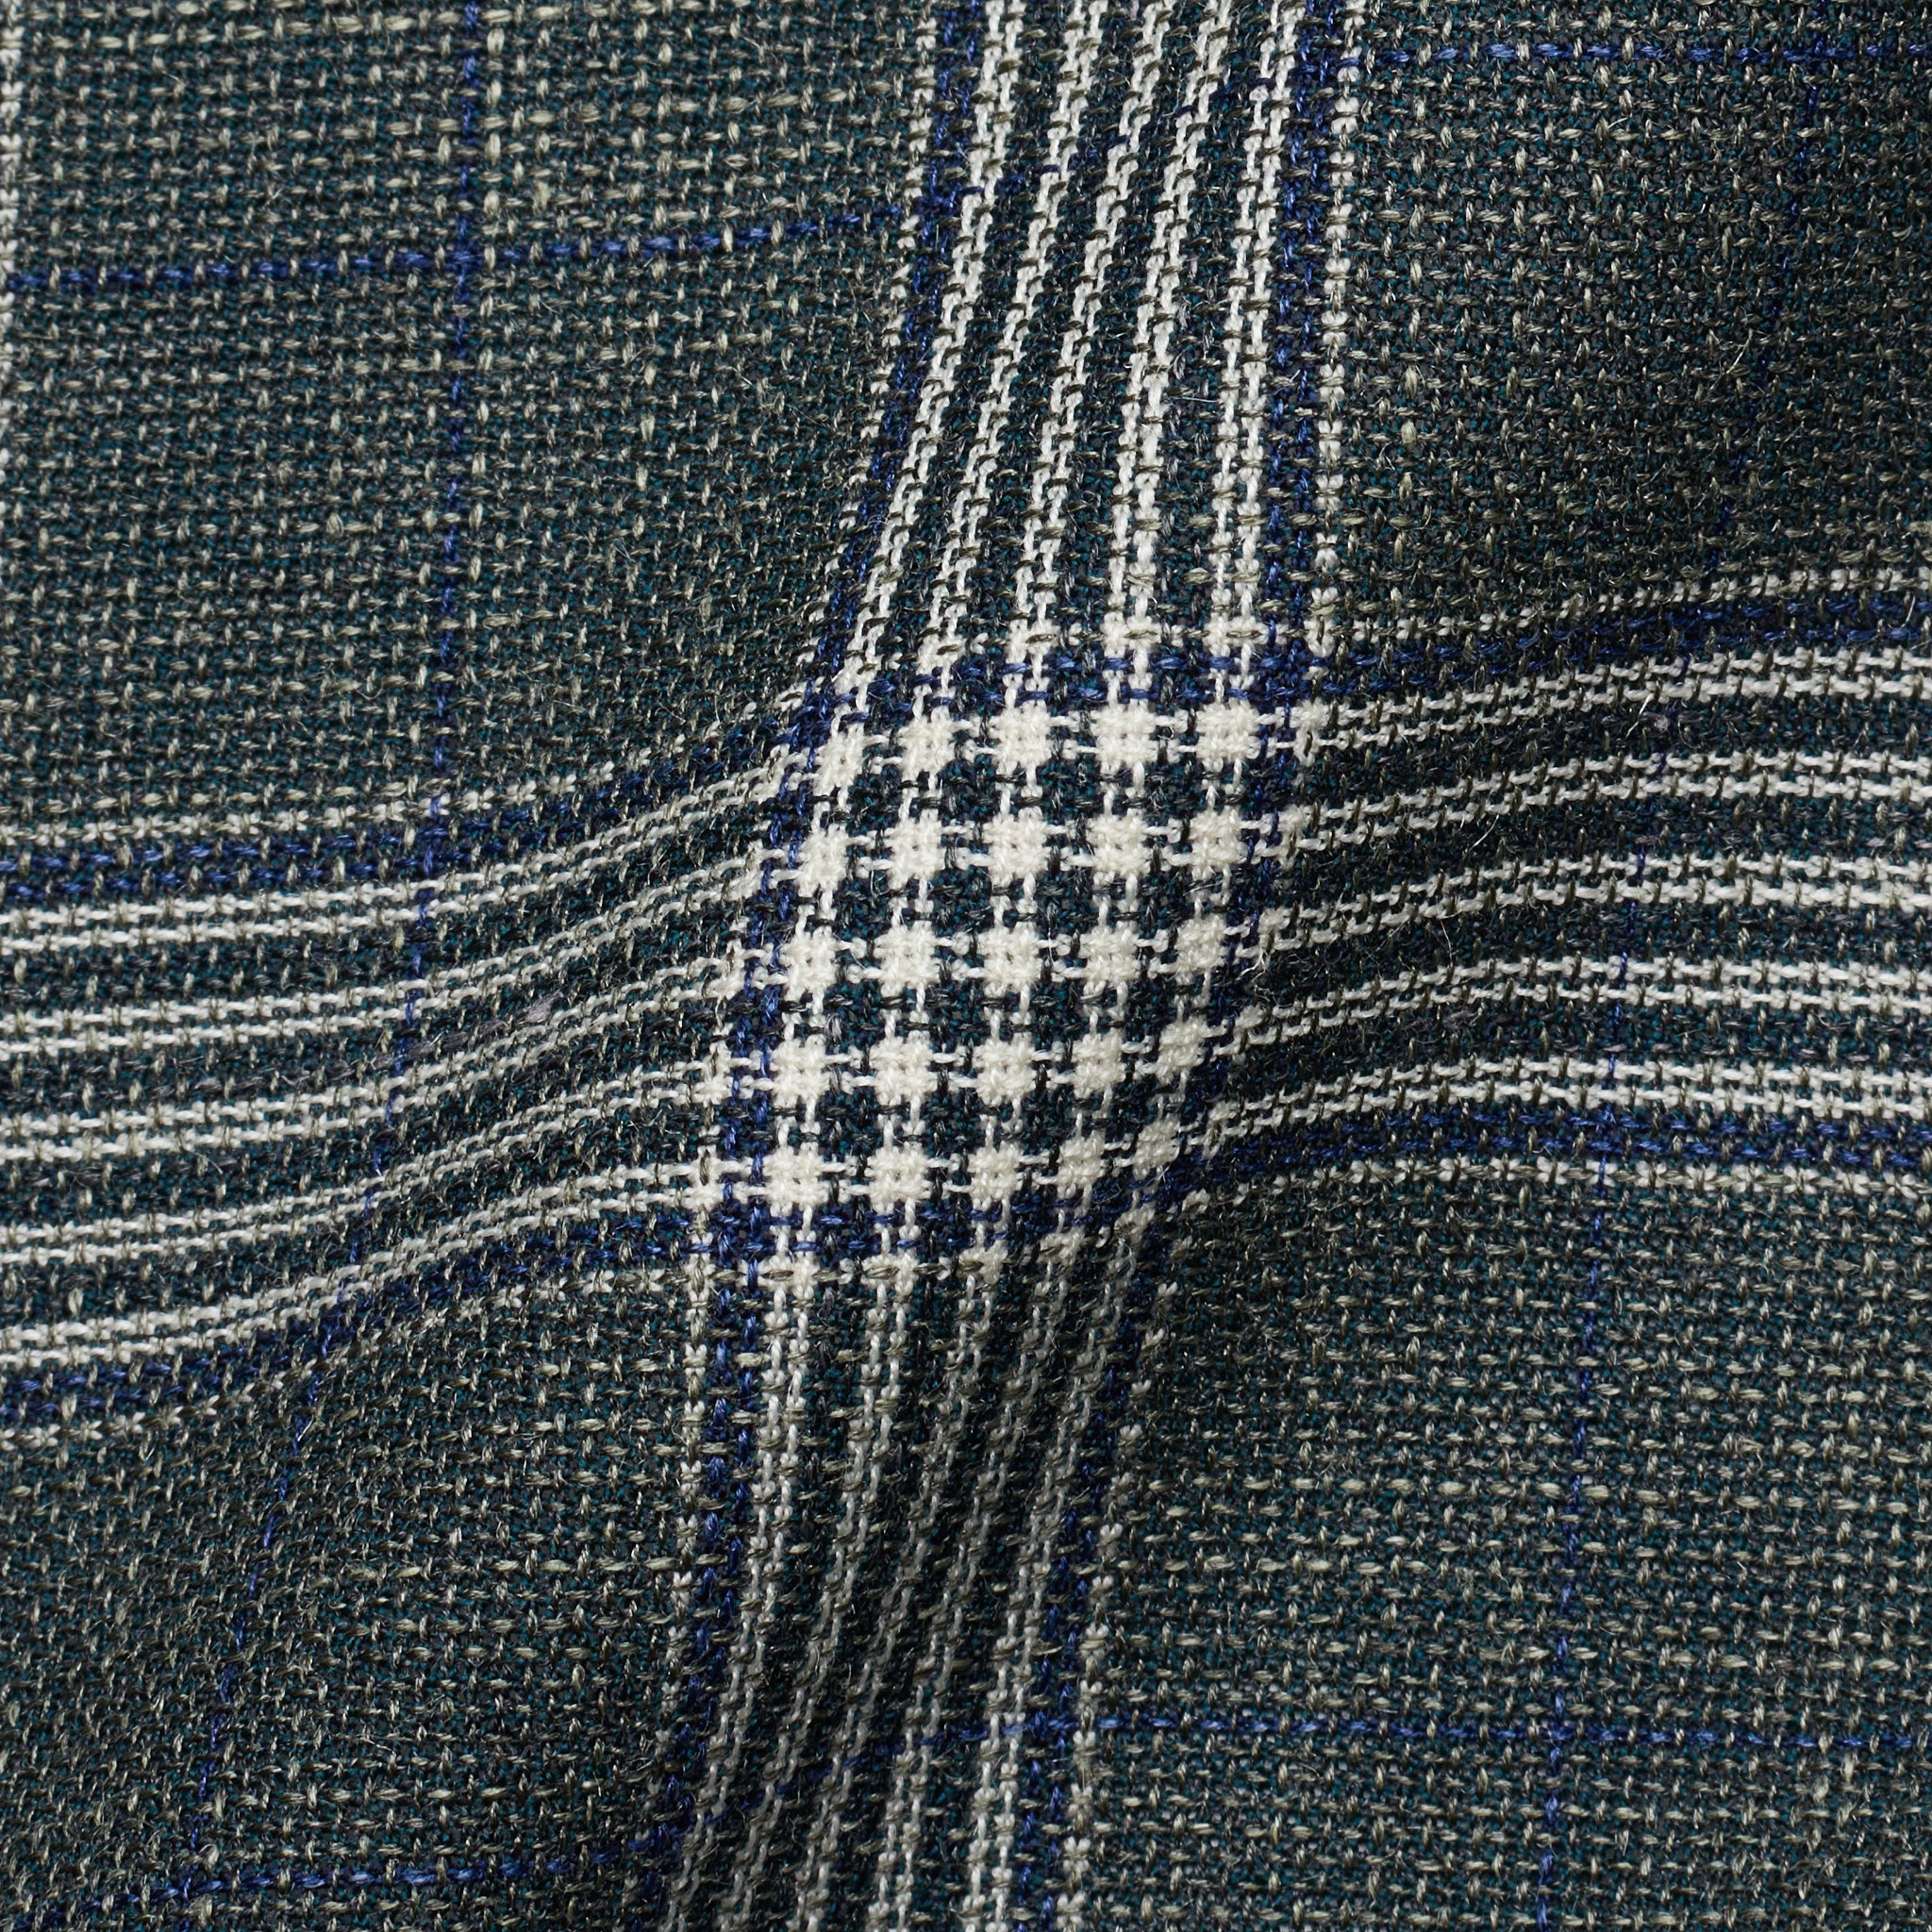 LUIGI BORRELLI Napoli "PROCIDA" Green Plaid Wool-Linen-Silk Jacket 52 NEW US 42